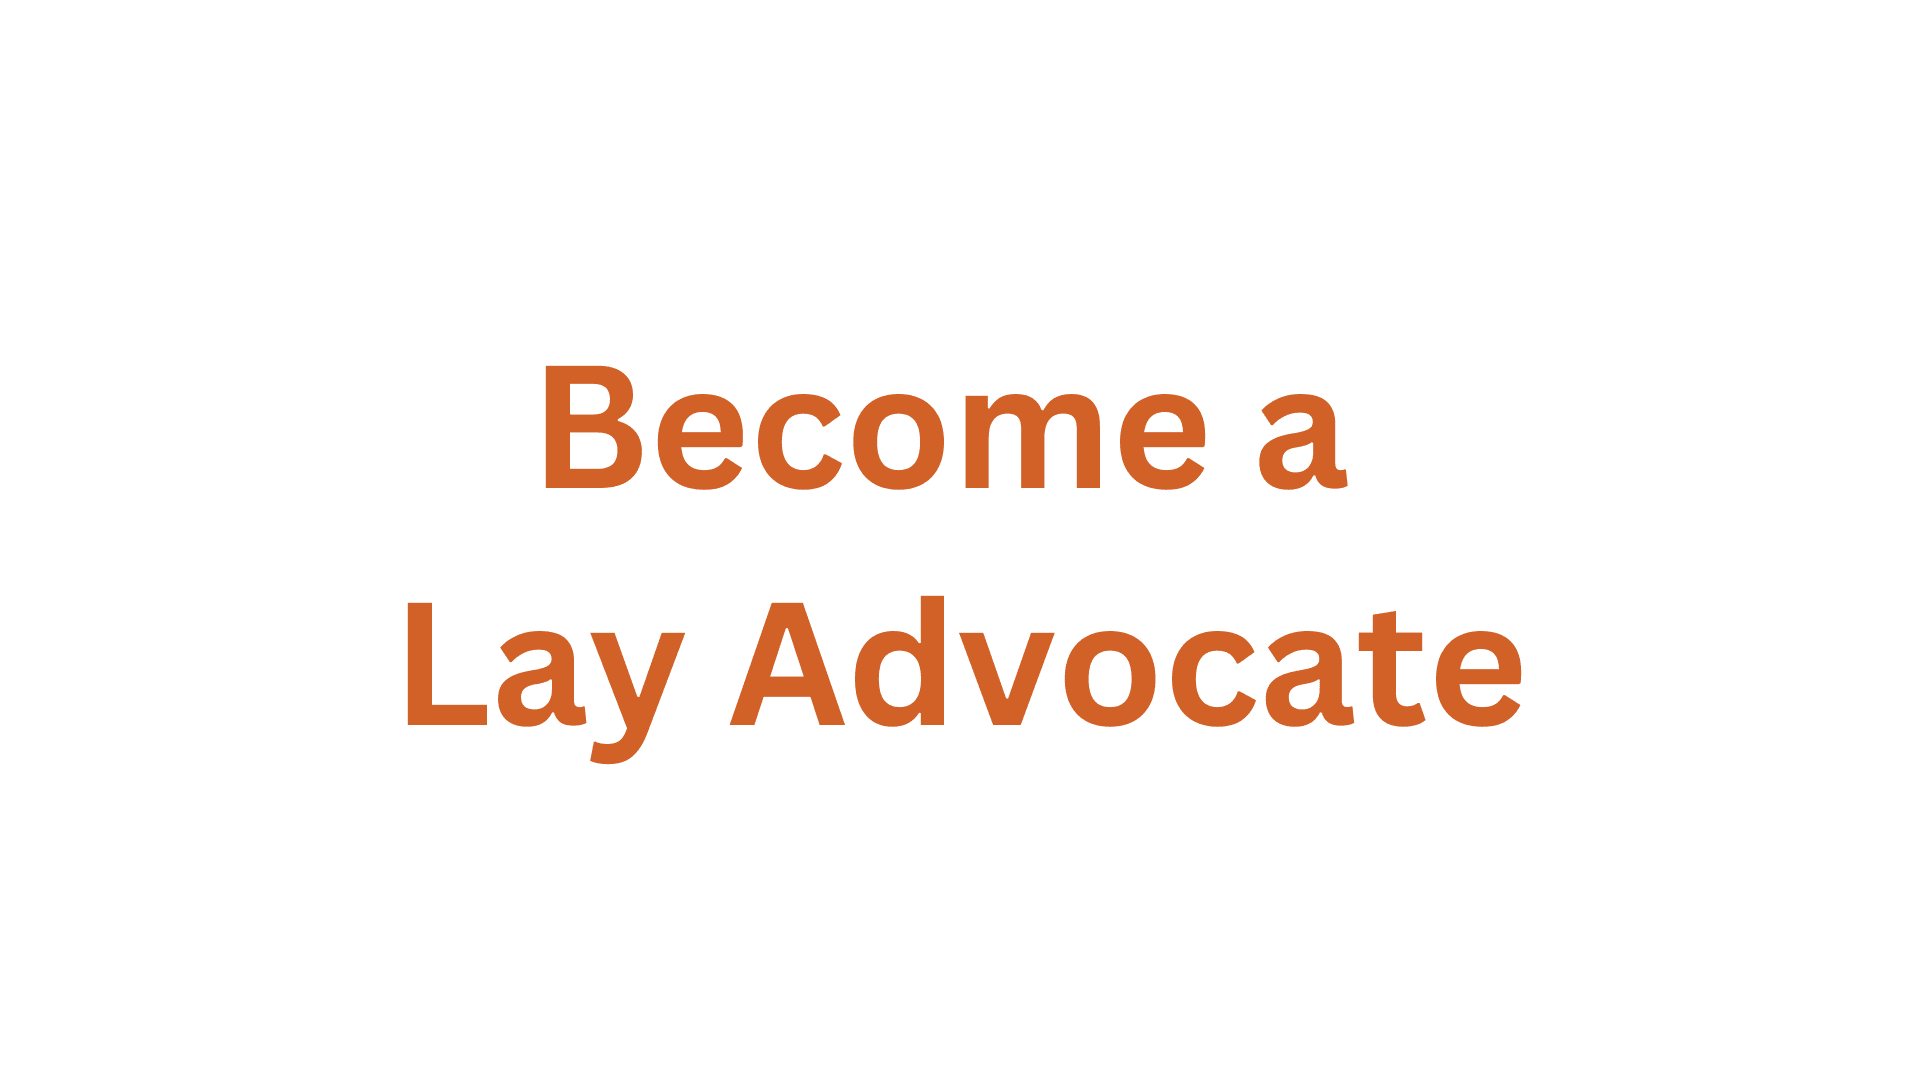 Lay Advocate